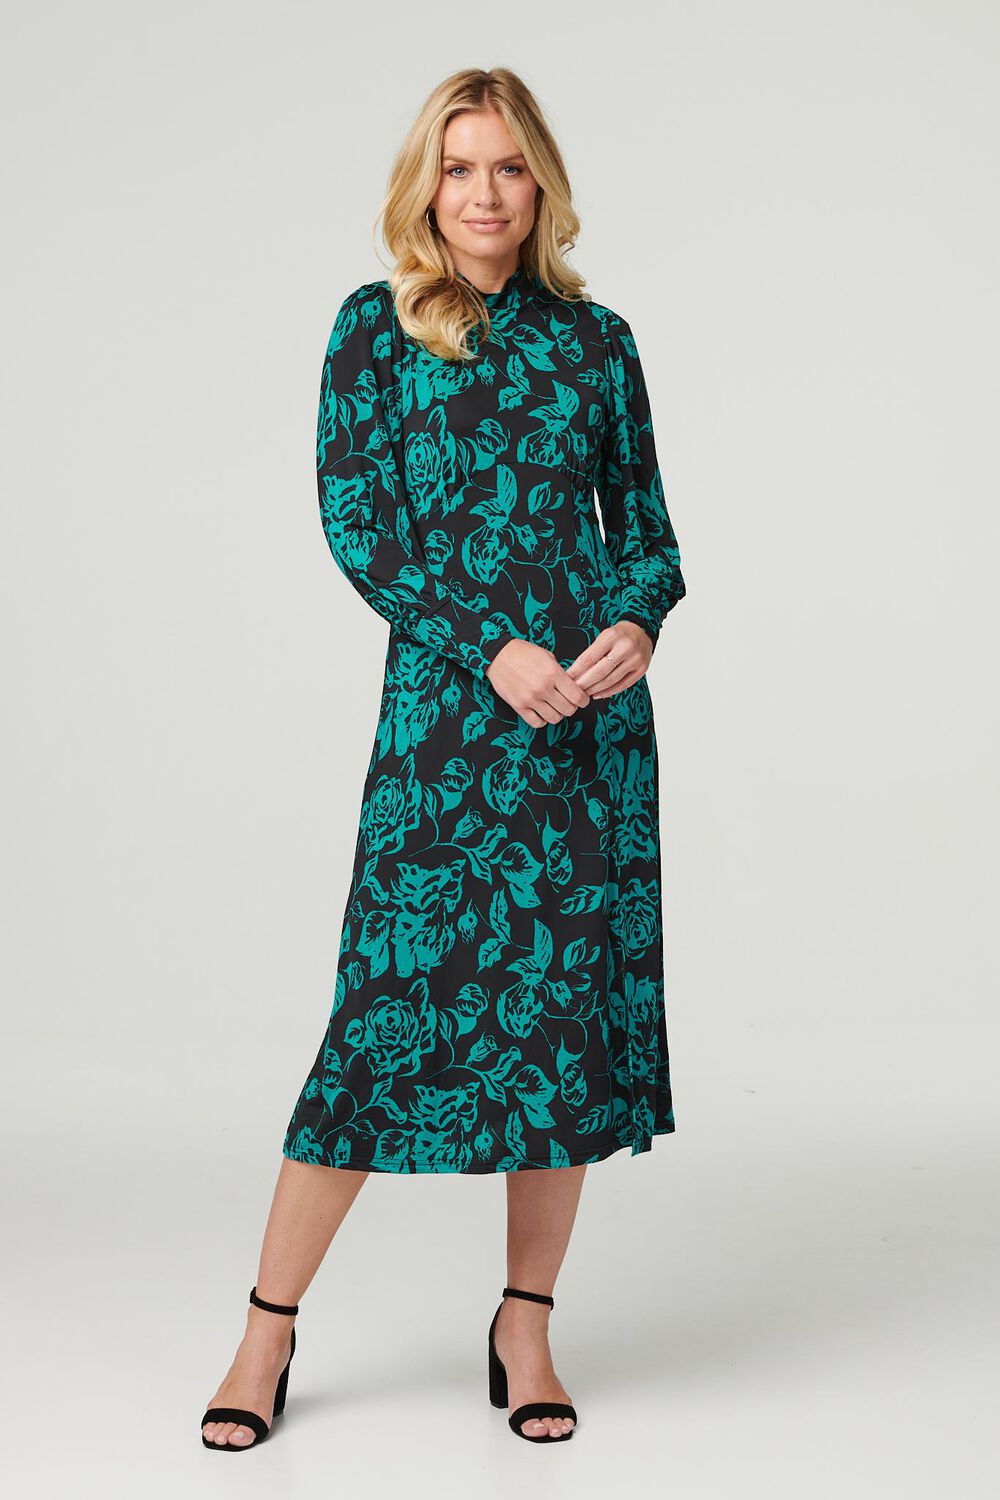 Izabel London Women’s Green and Black Floral Print Long Sleeve High Neck Split Midi Dress, Size: 18